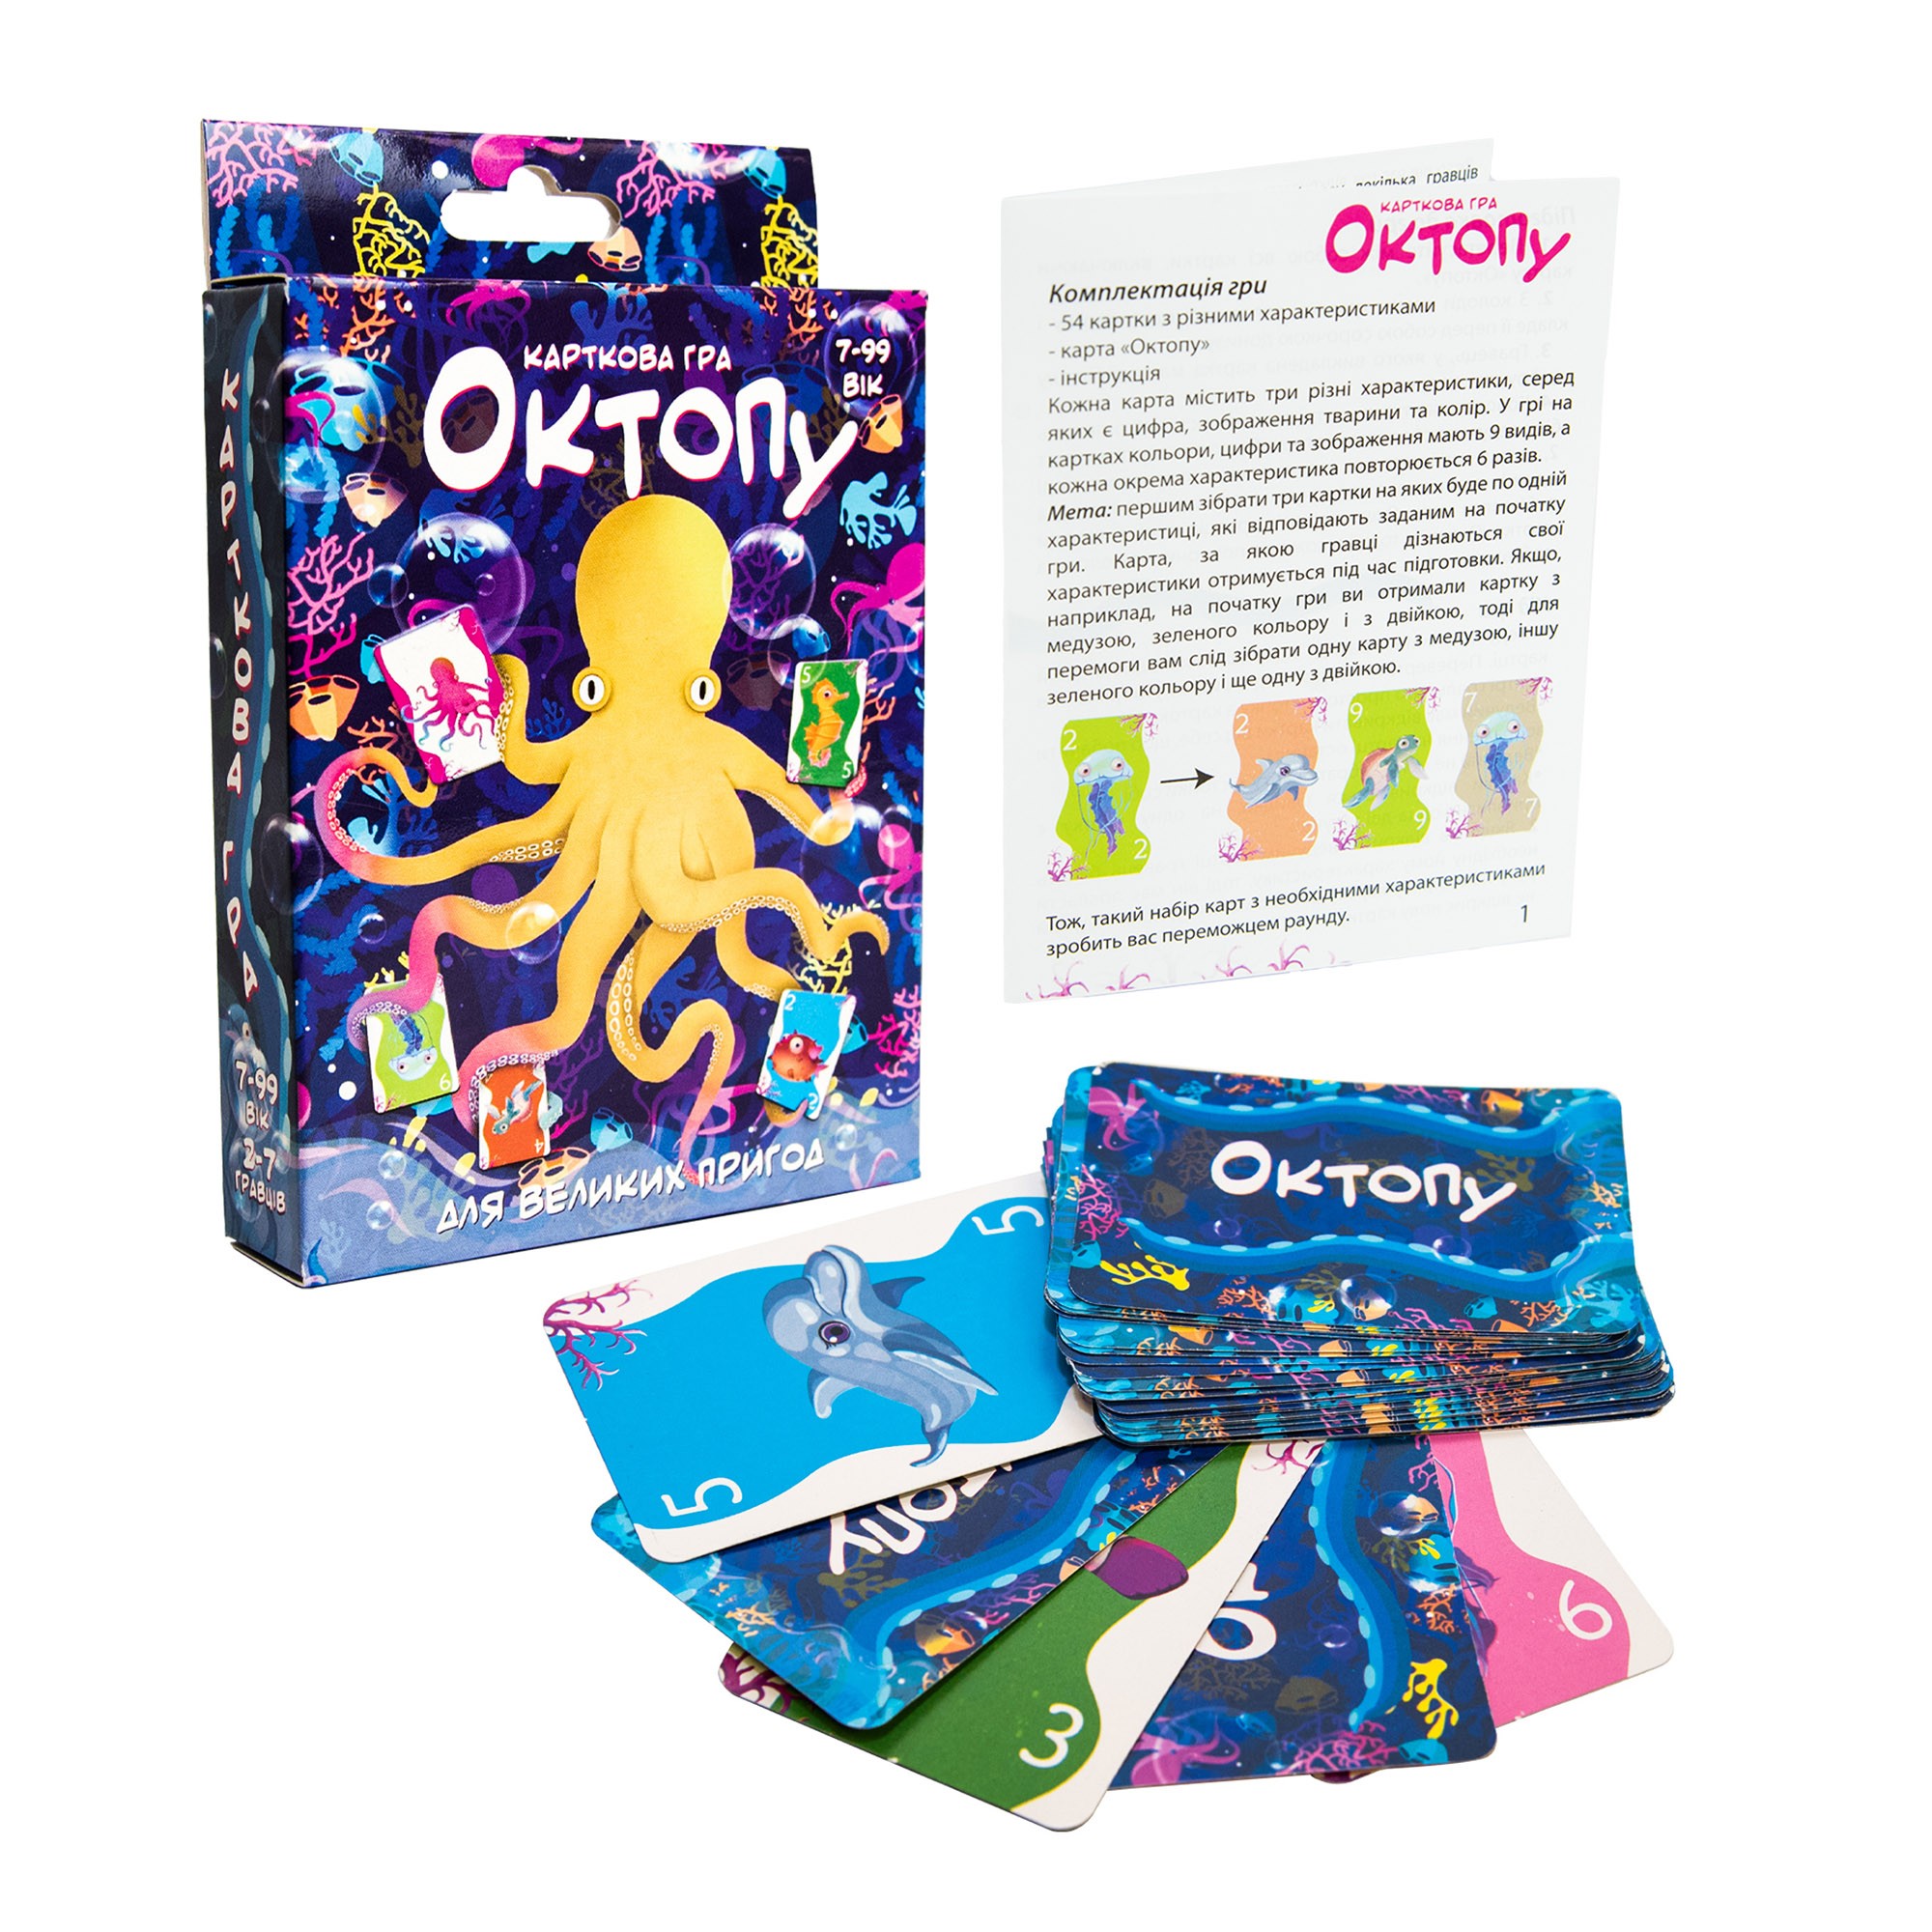 Настольная игра Октопа, бренду Strateg, для 2-7 гравців, час гри < 30мин. - 2 - KUBIX 